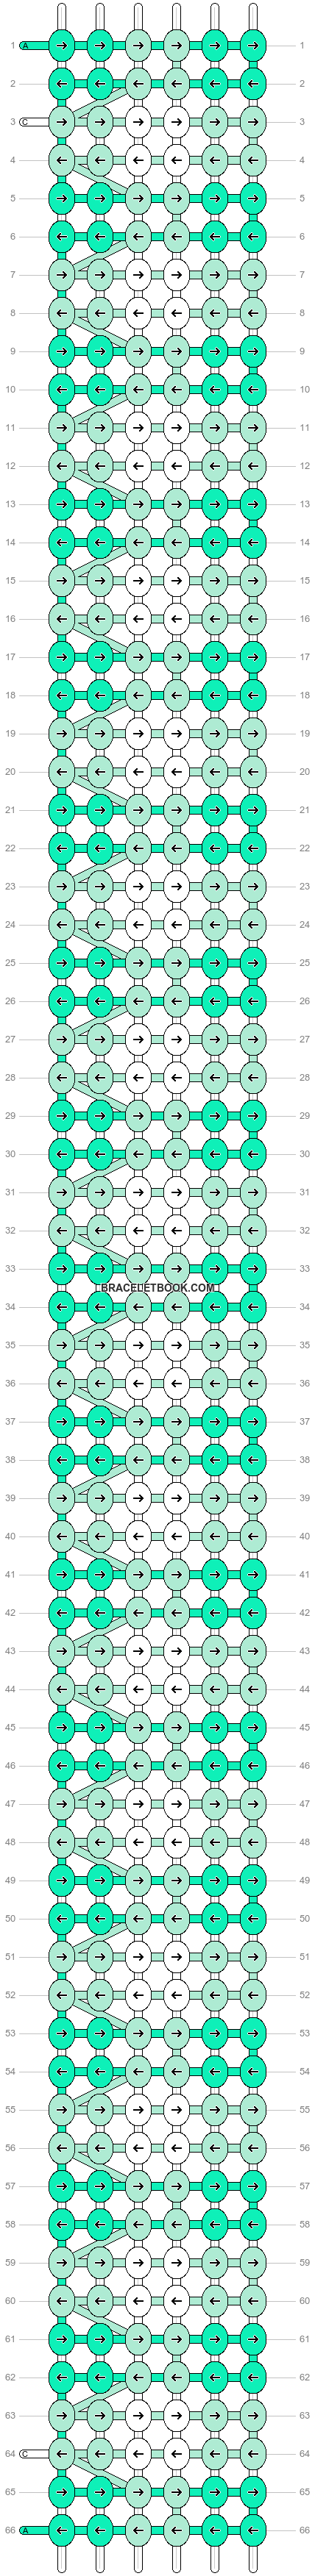 Alpha pattern #80755 variation #146914 pattern